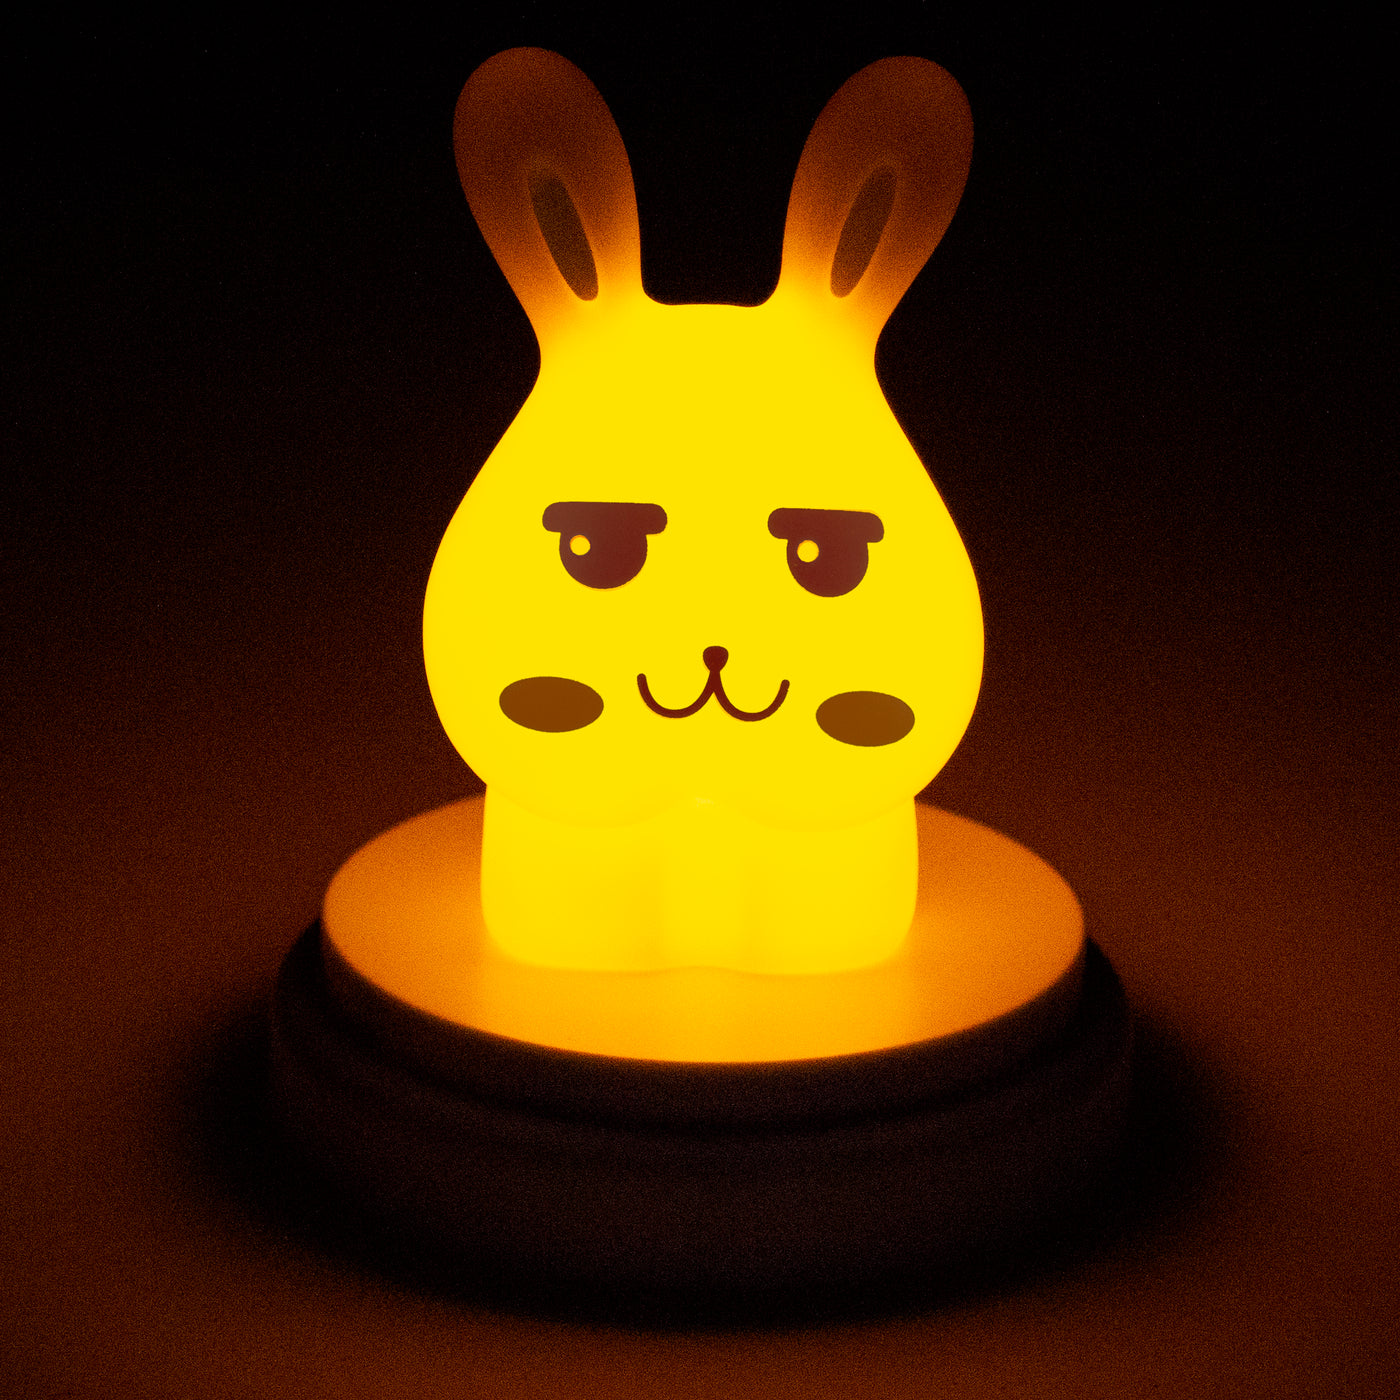 Alecto FUNNY BUNNY - Veilleuse LED, jaune